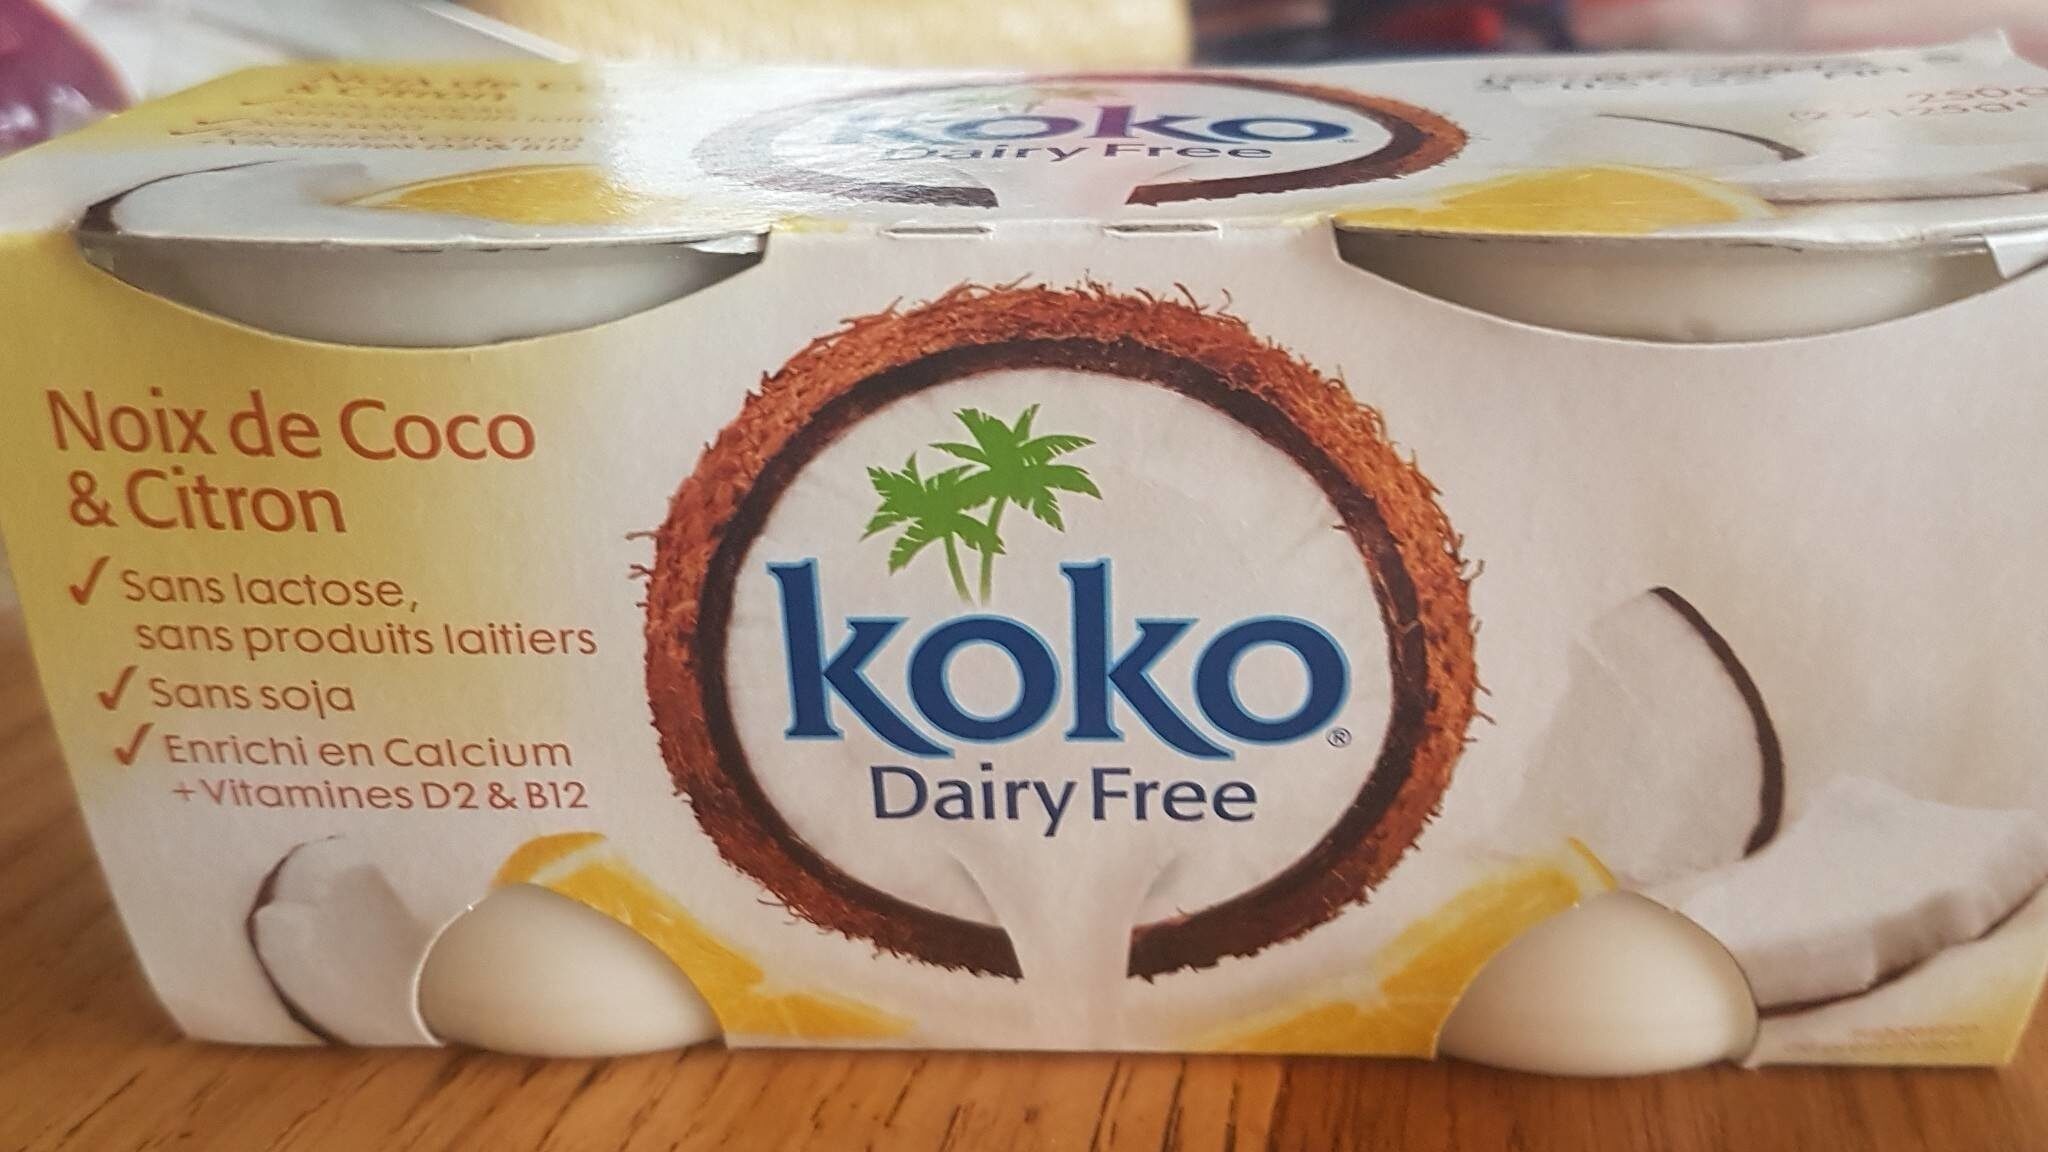 Koko Dairy free noix de coco & citron - Produit